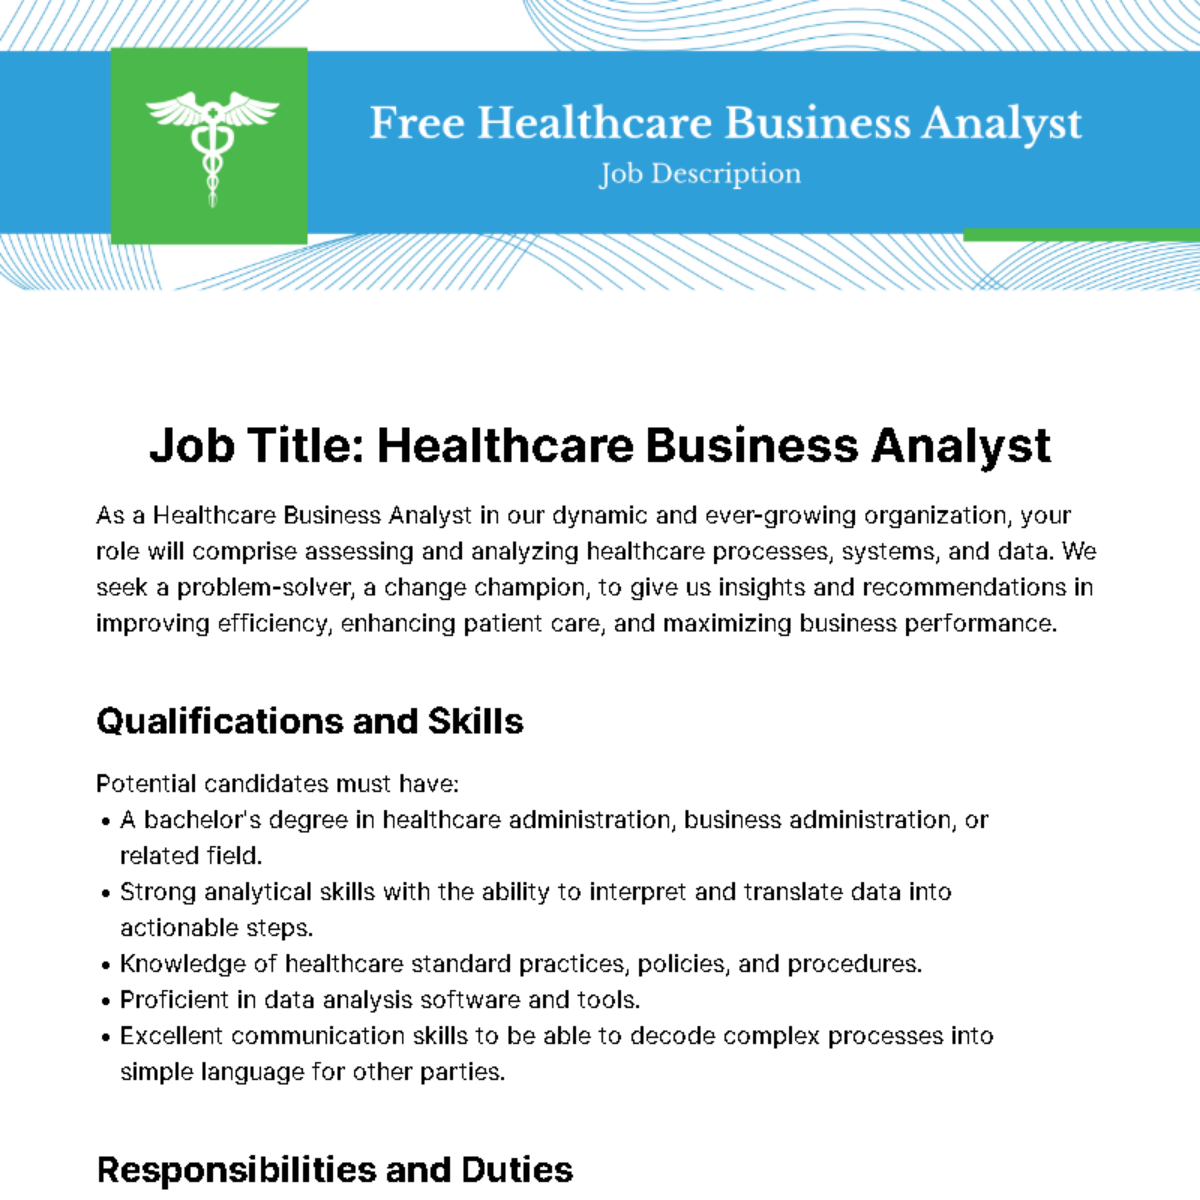 Free Healthcare Business Analyst Job Description Template